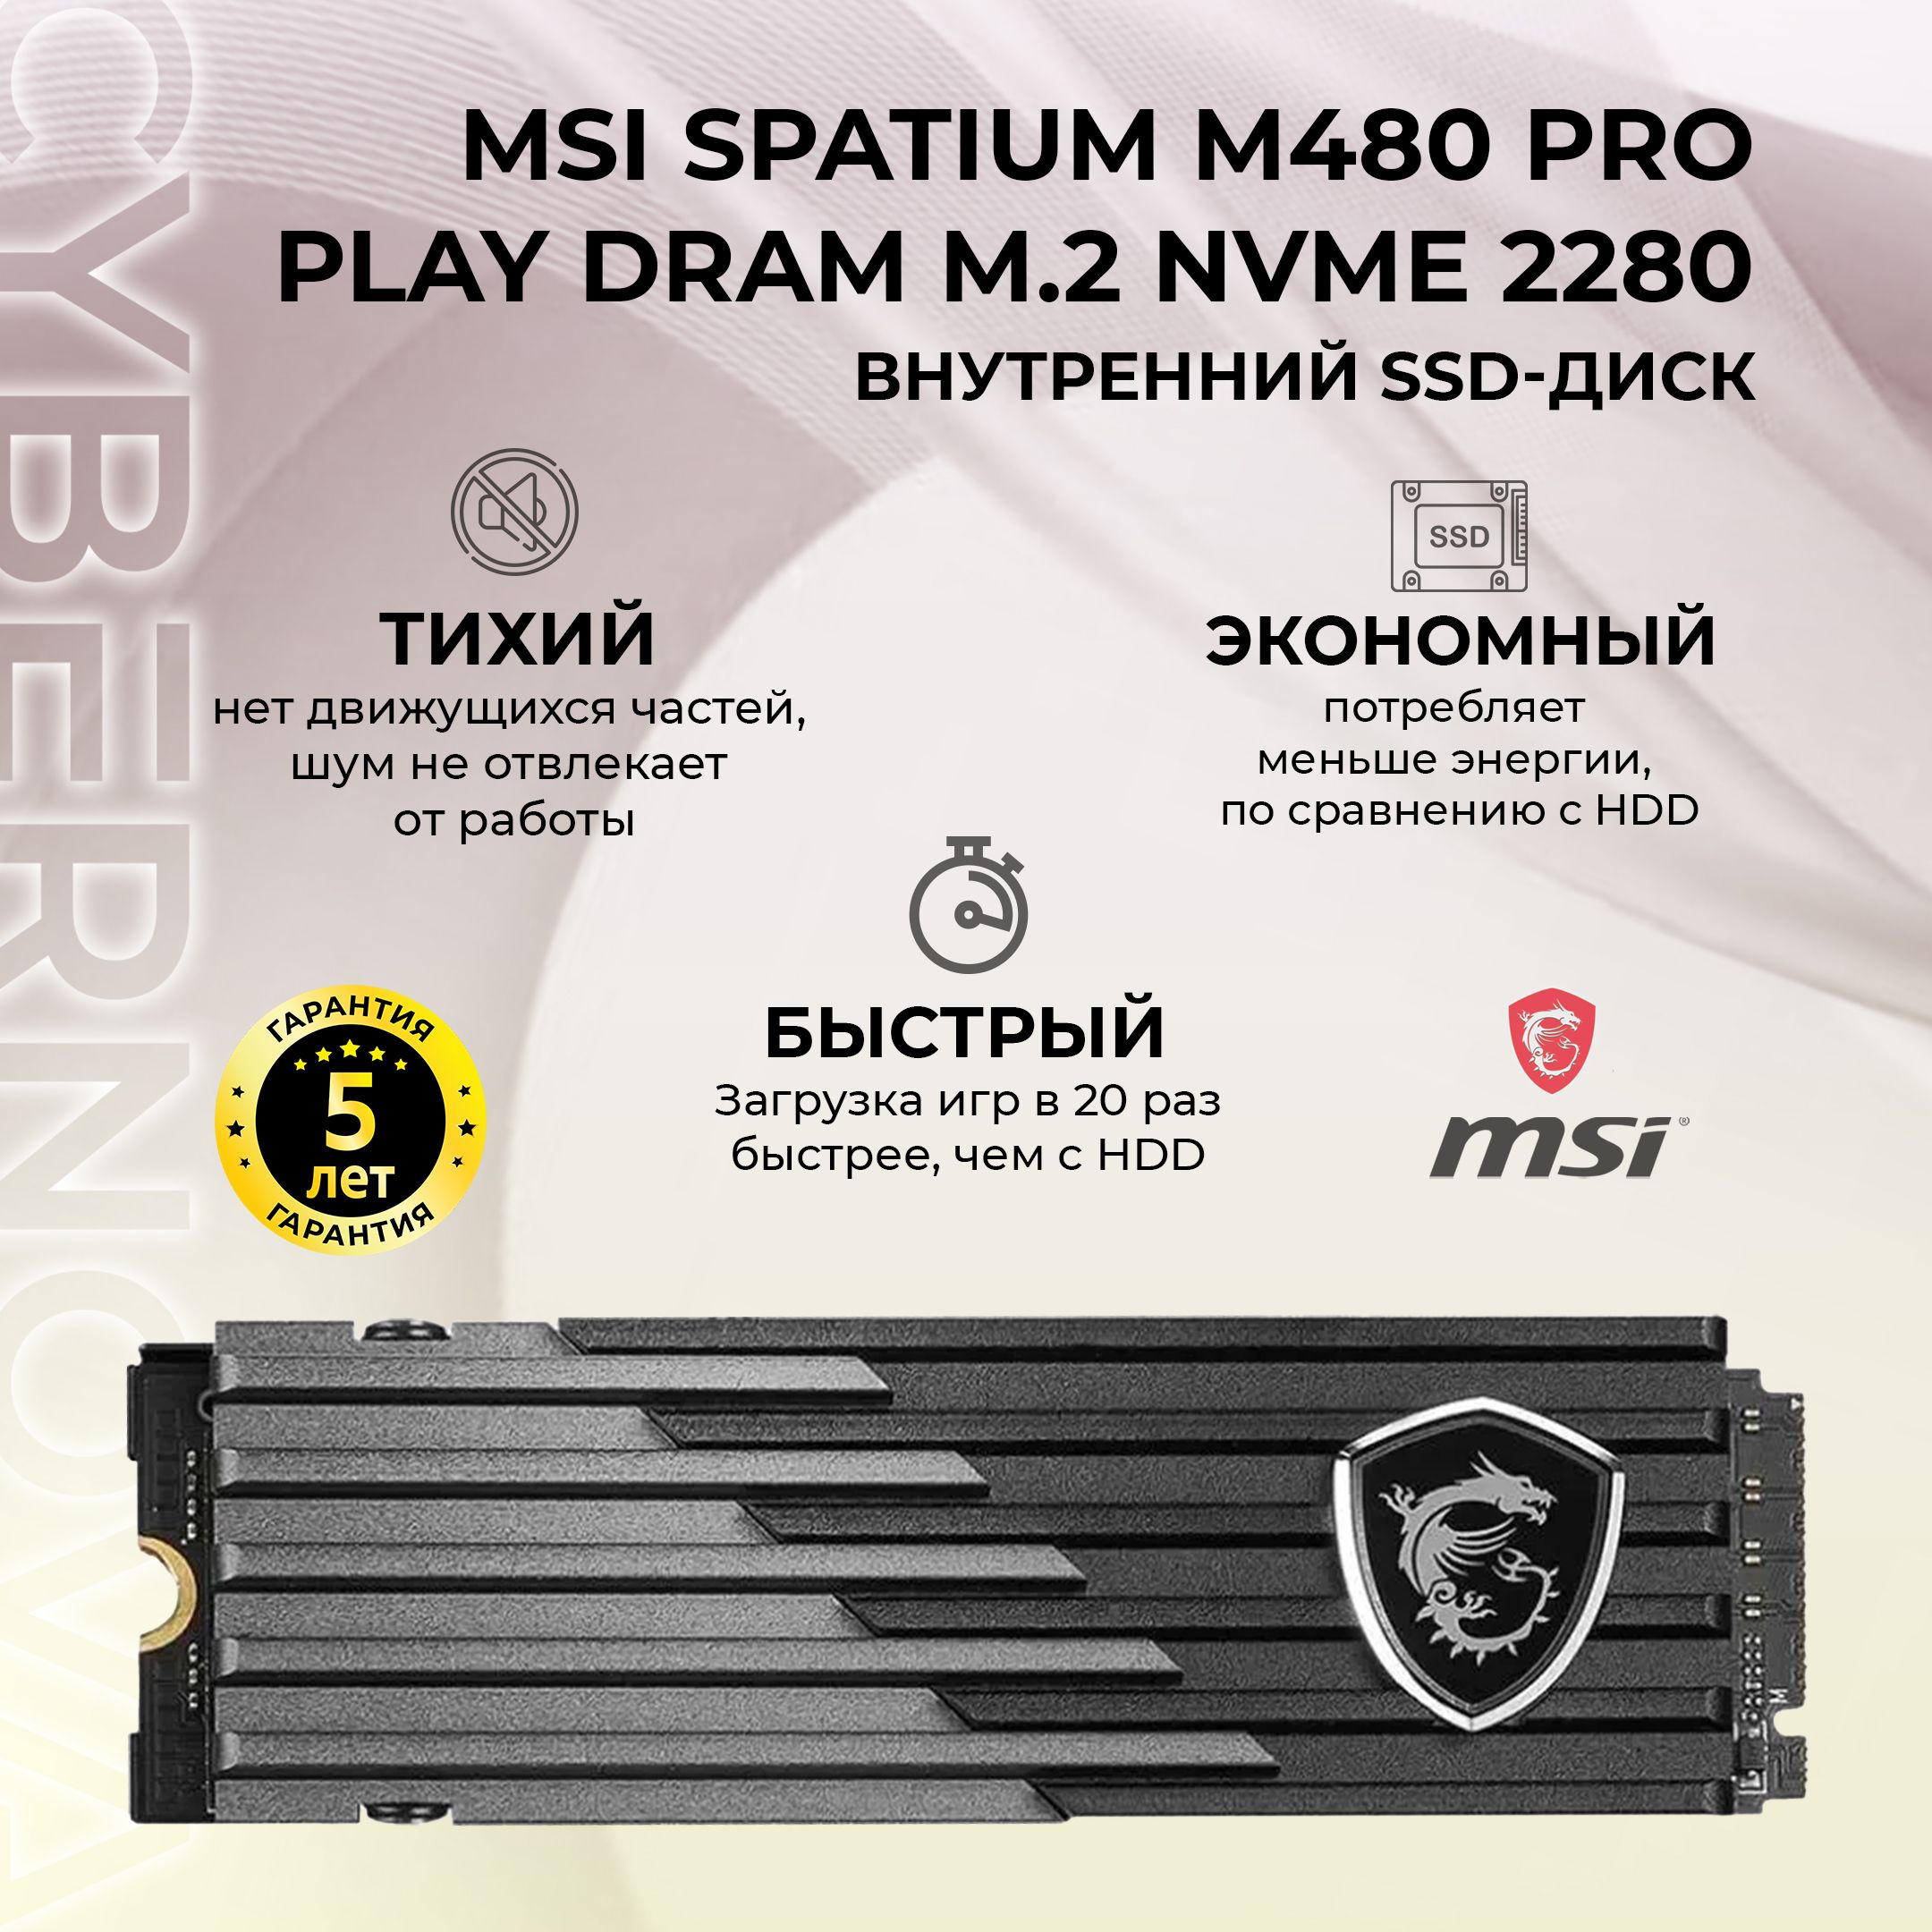 2 ТБ Внутренний SSD-диск MSI M480 PRO PLAY M.2 2280 NVME  (M480_PRO_2TB_PLAY) - купить по выгодной цене в интернет-магазине OZON  (1412180524)